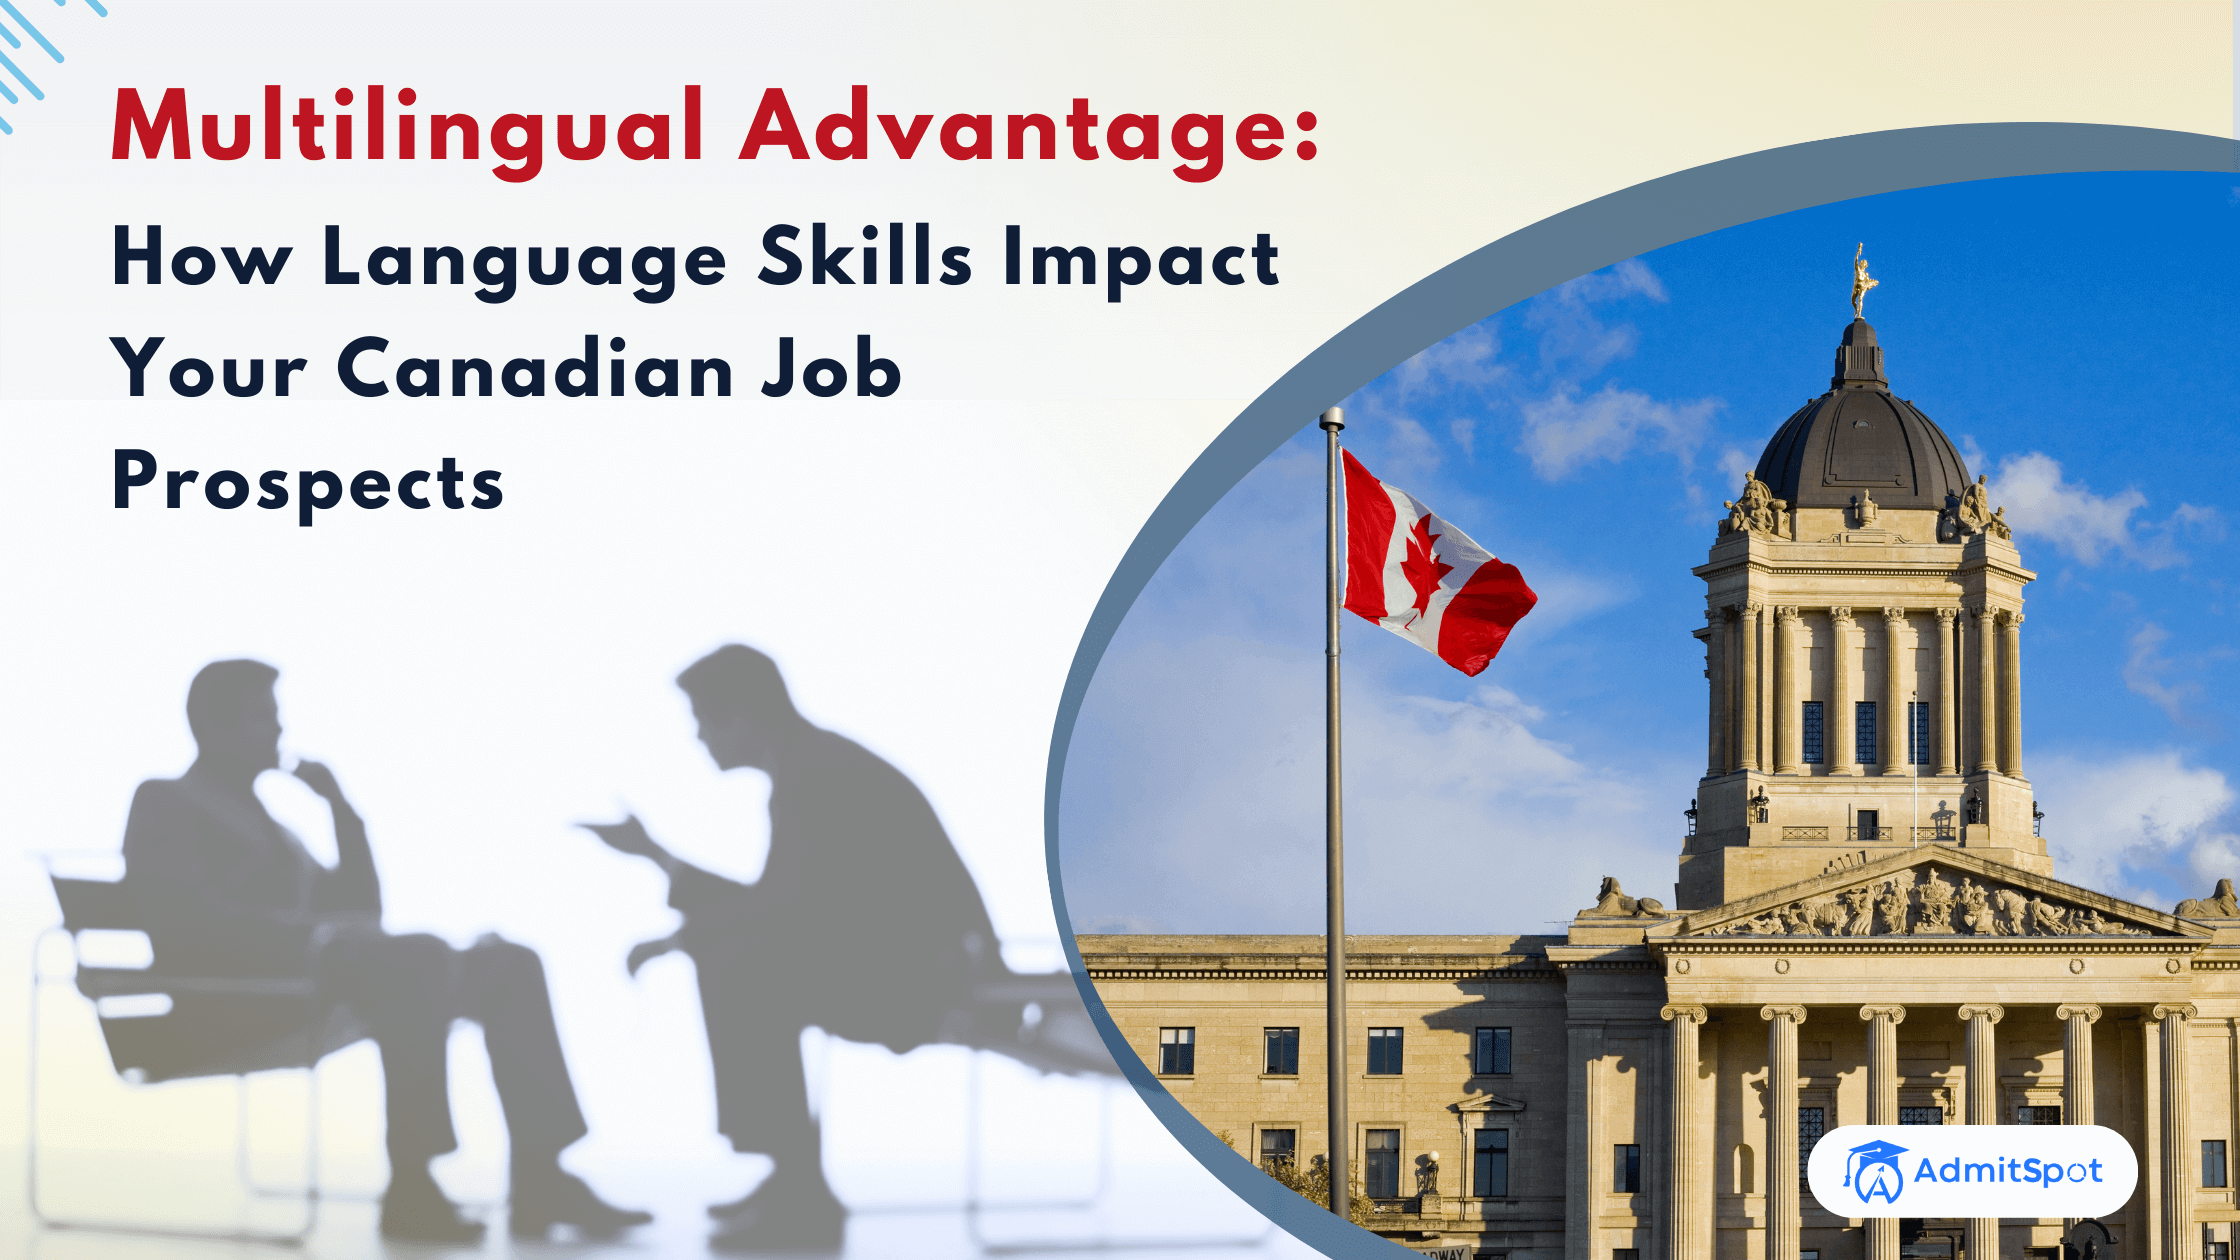 Multilingual Advantage: How Language Skills Impact Your Canadian Job Prospects